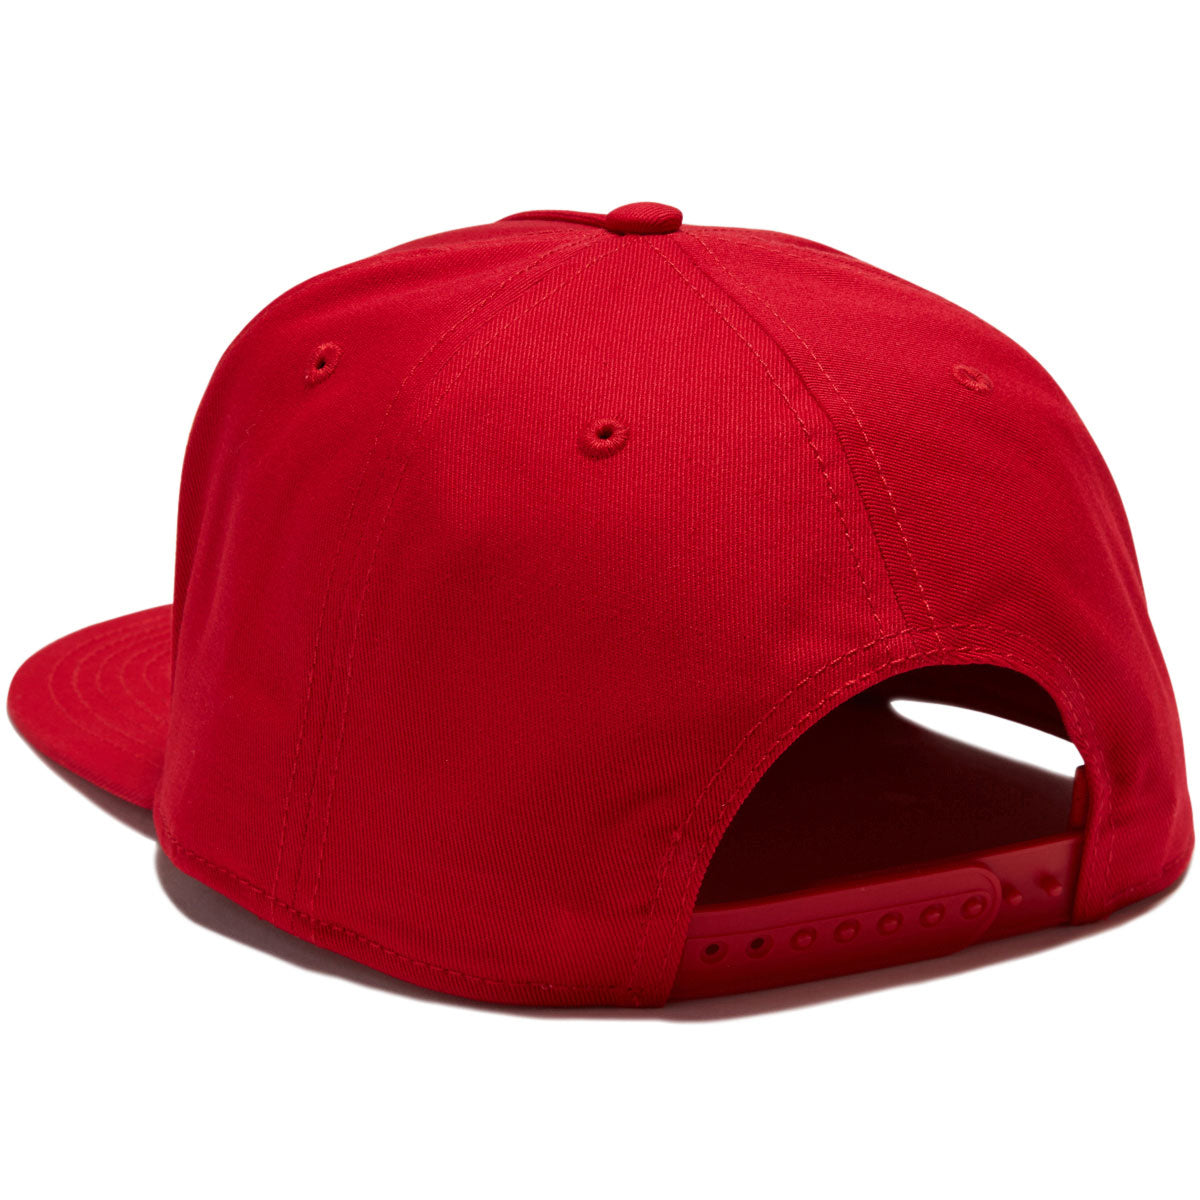 eS Main Block Snapback Hat - Red image 2